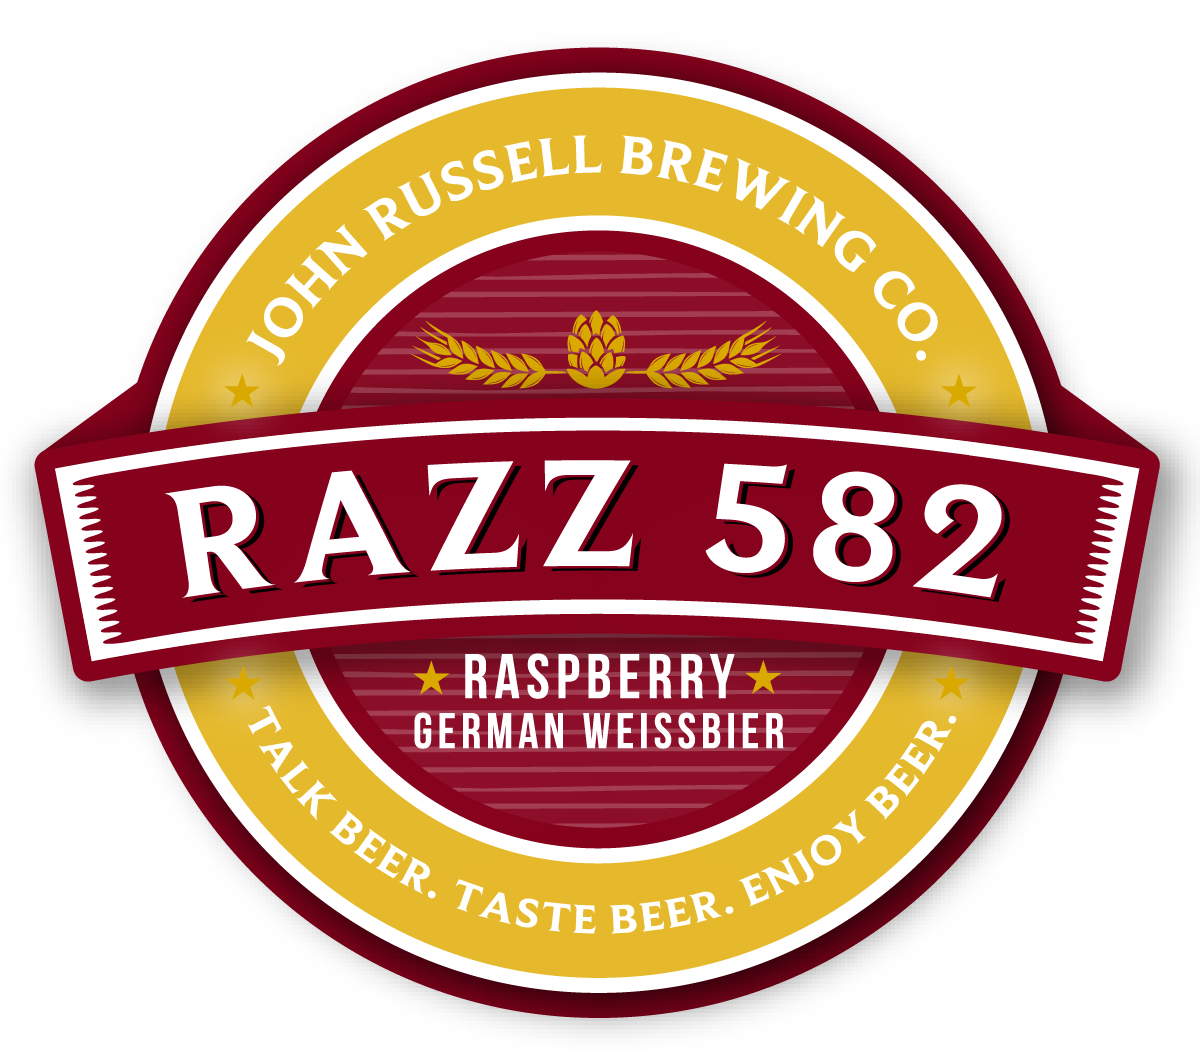 John Russell Brewing Co Label Razz 582